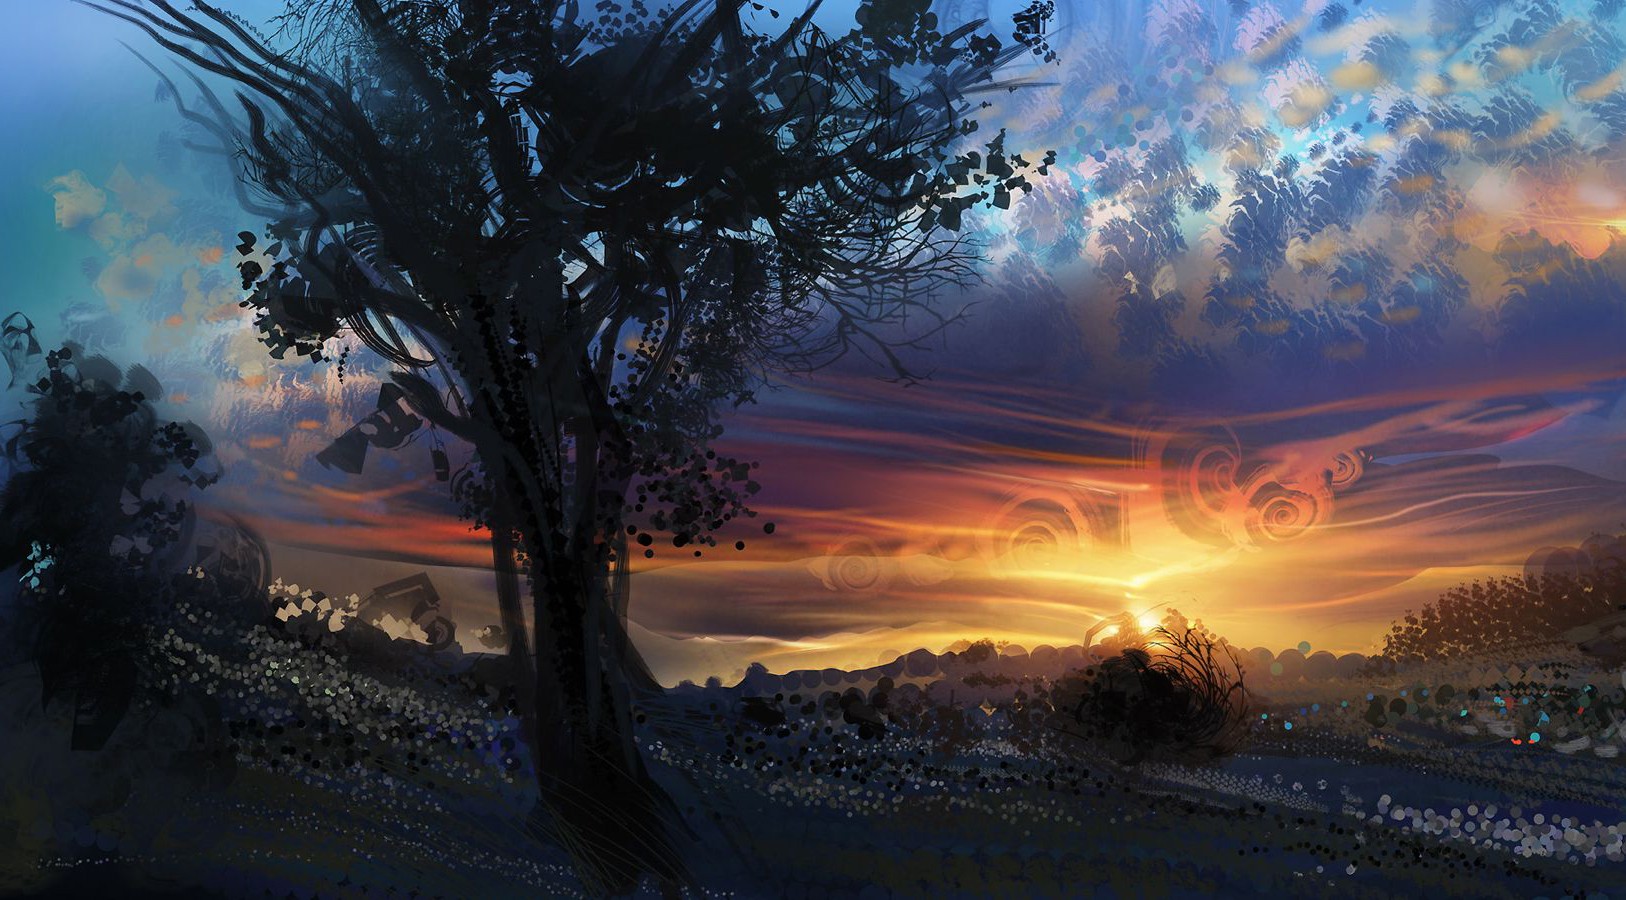 General 1626x900 digital art painting trees clouds sunset artwork nature field landscape sky sunlight